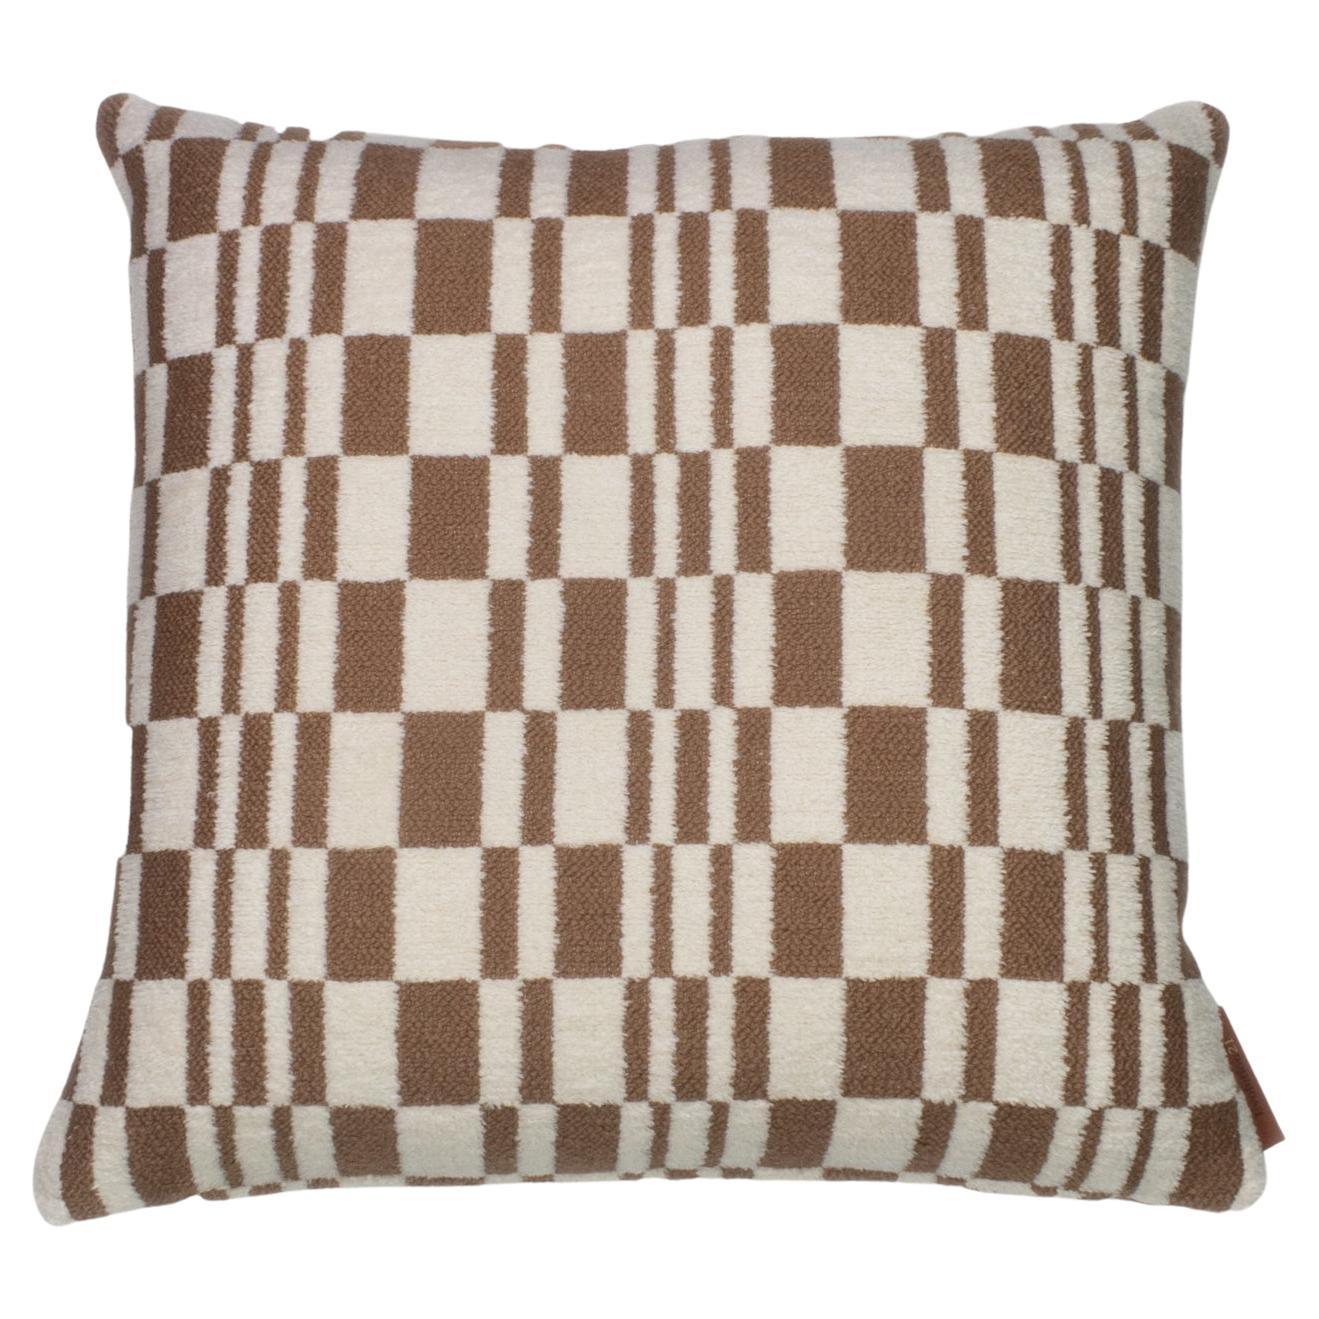 Cushion / Pillow Chess Savannah Brown by Evolution21 For Sale